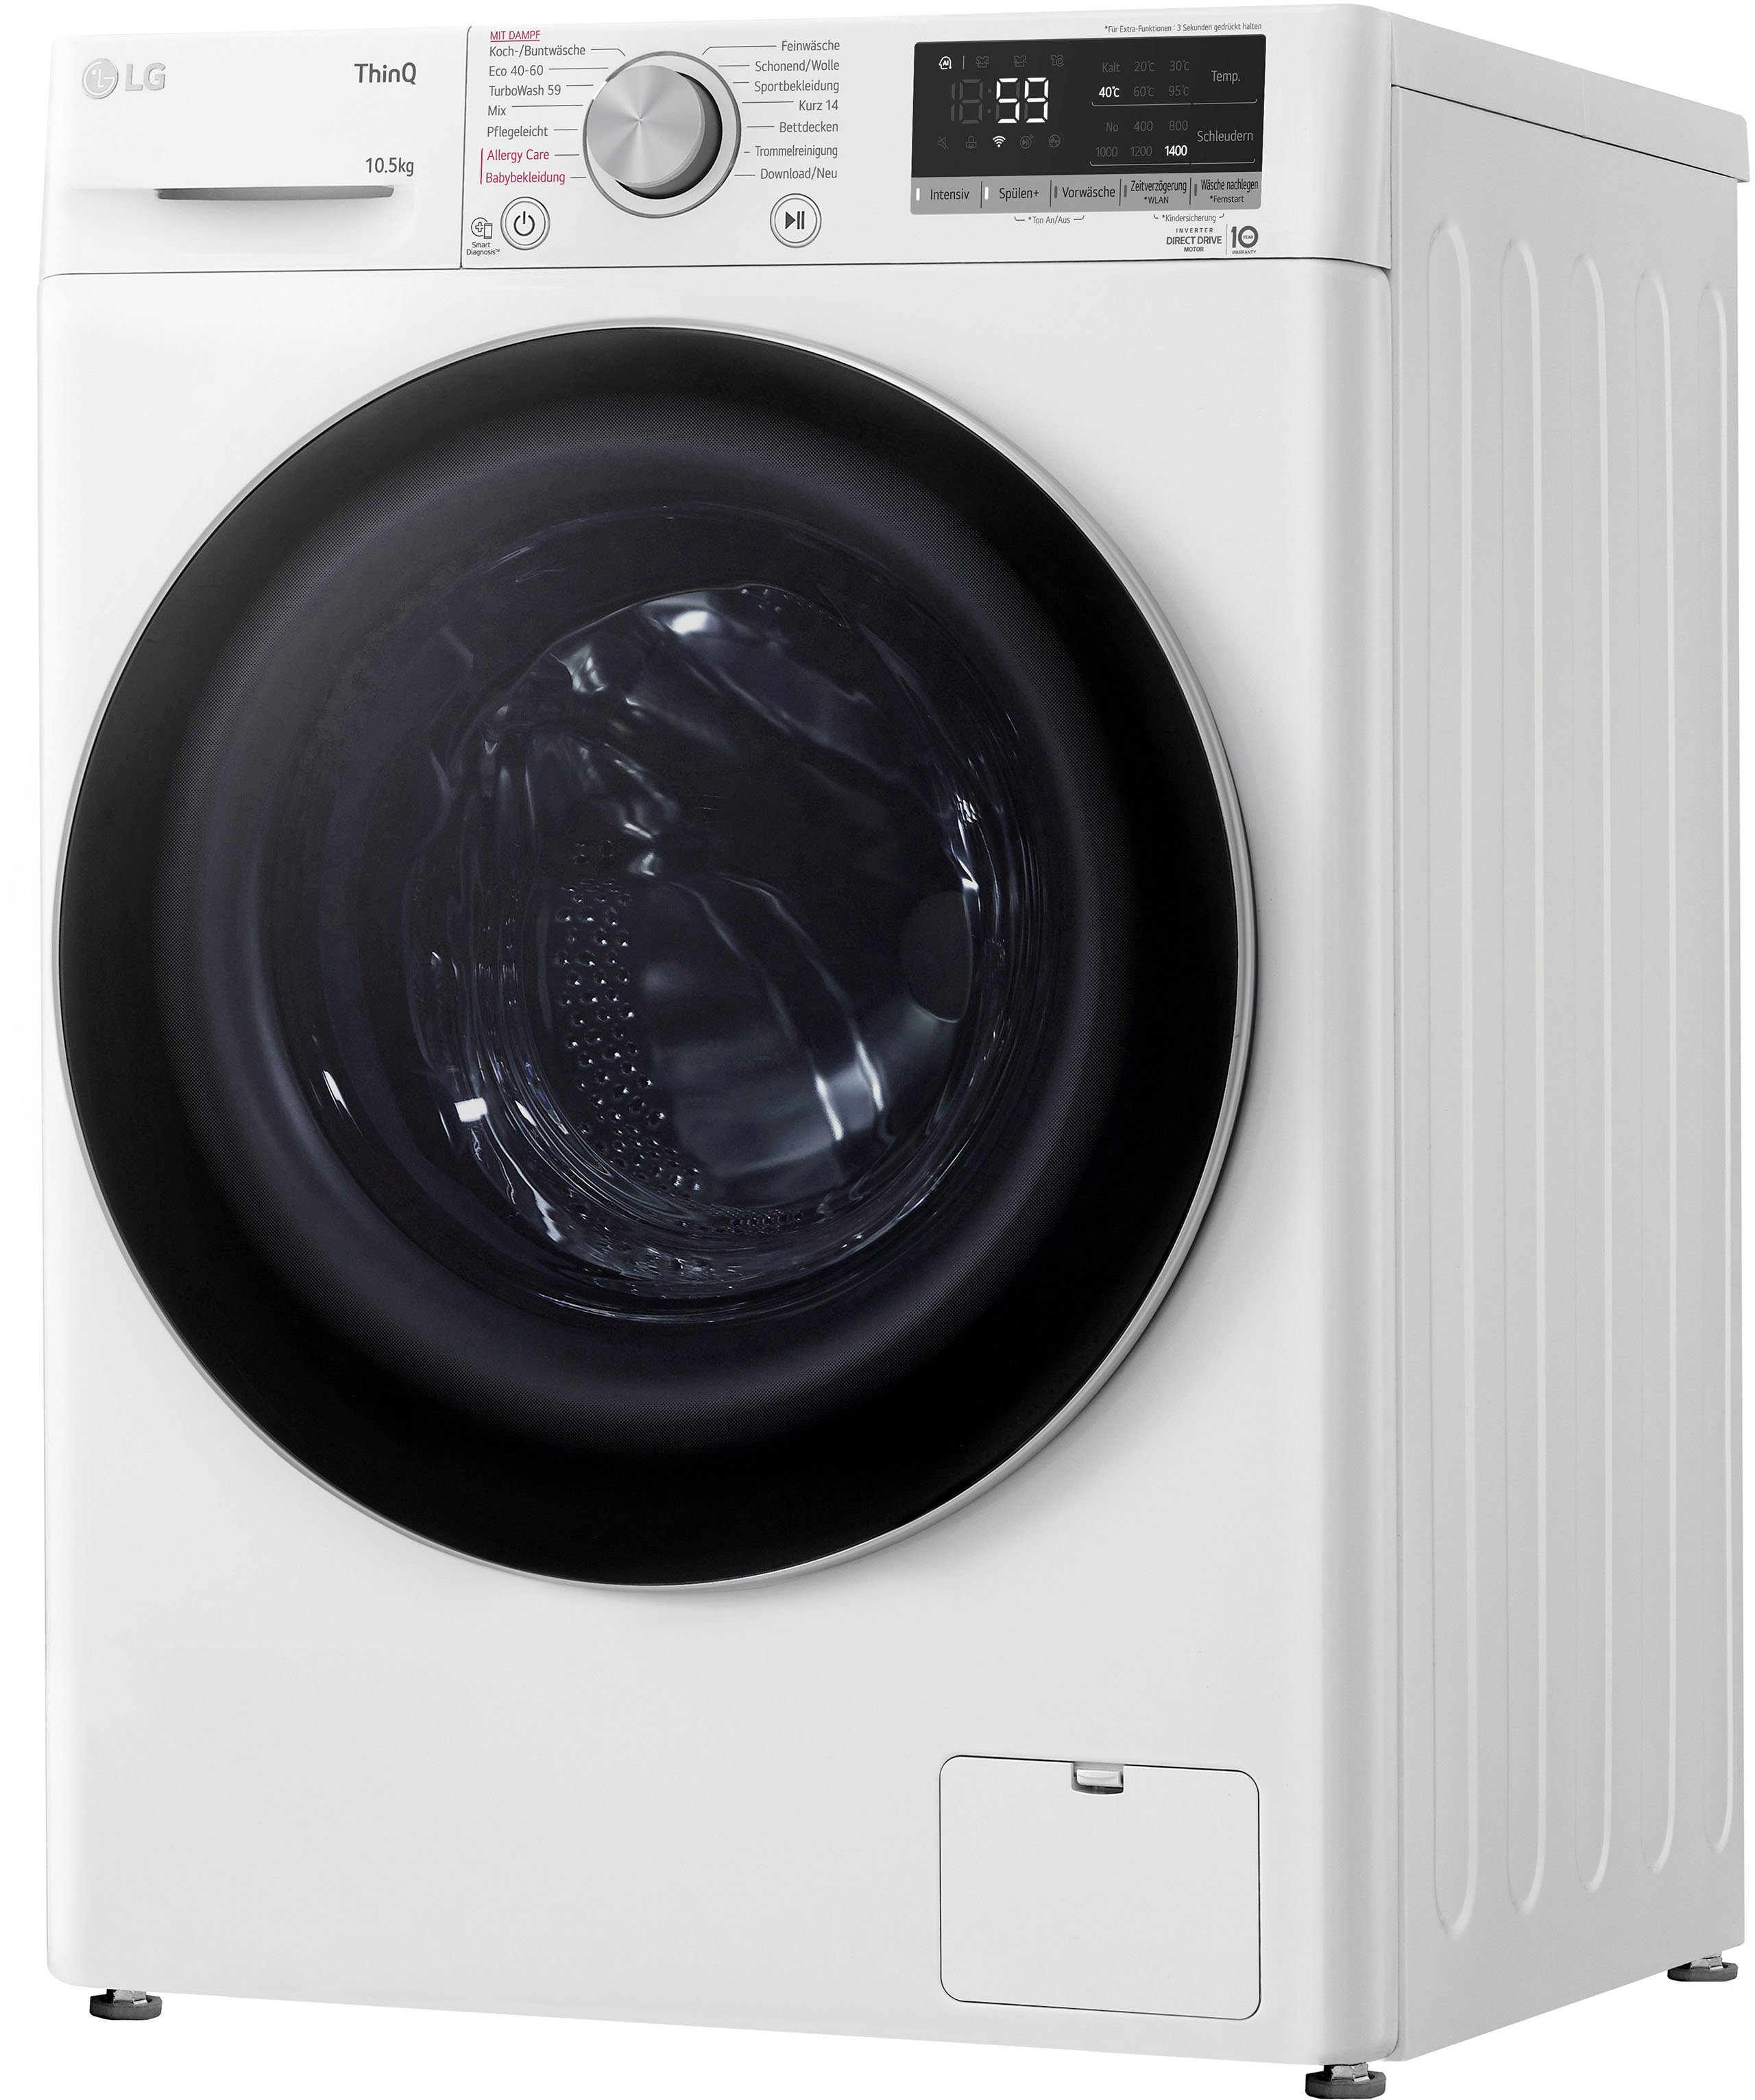 LG Waschmaschine F4WV70X1, 10,5 kg, U/min 1400